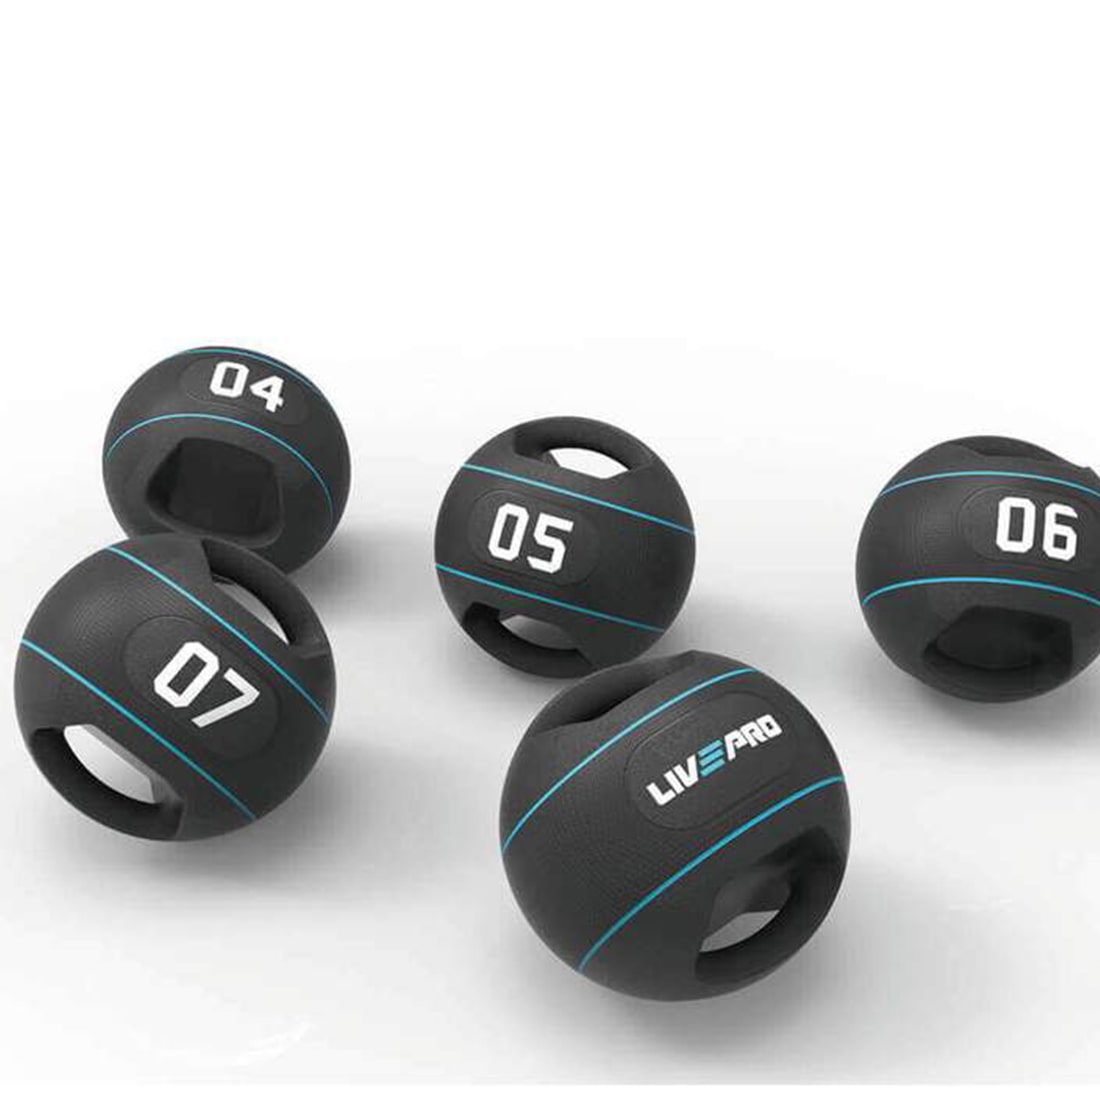 Livepro Double Grip Medicine Balls